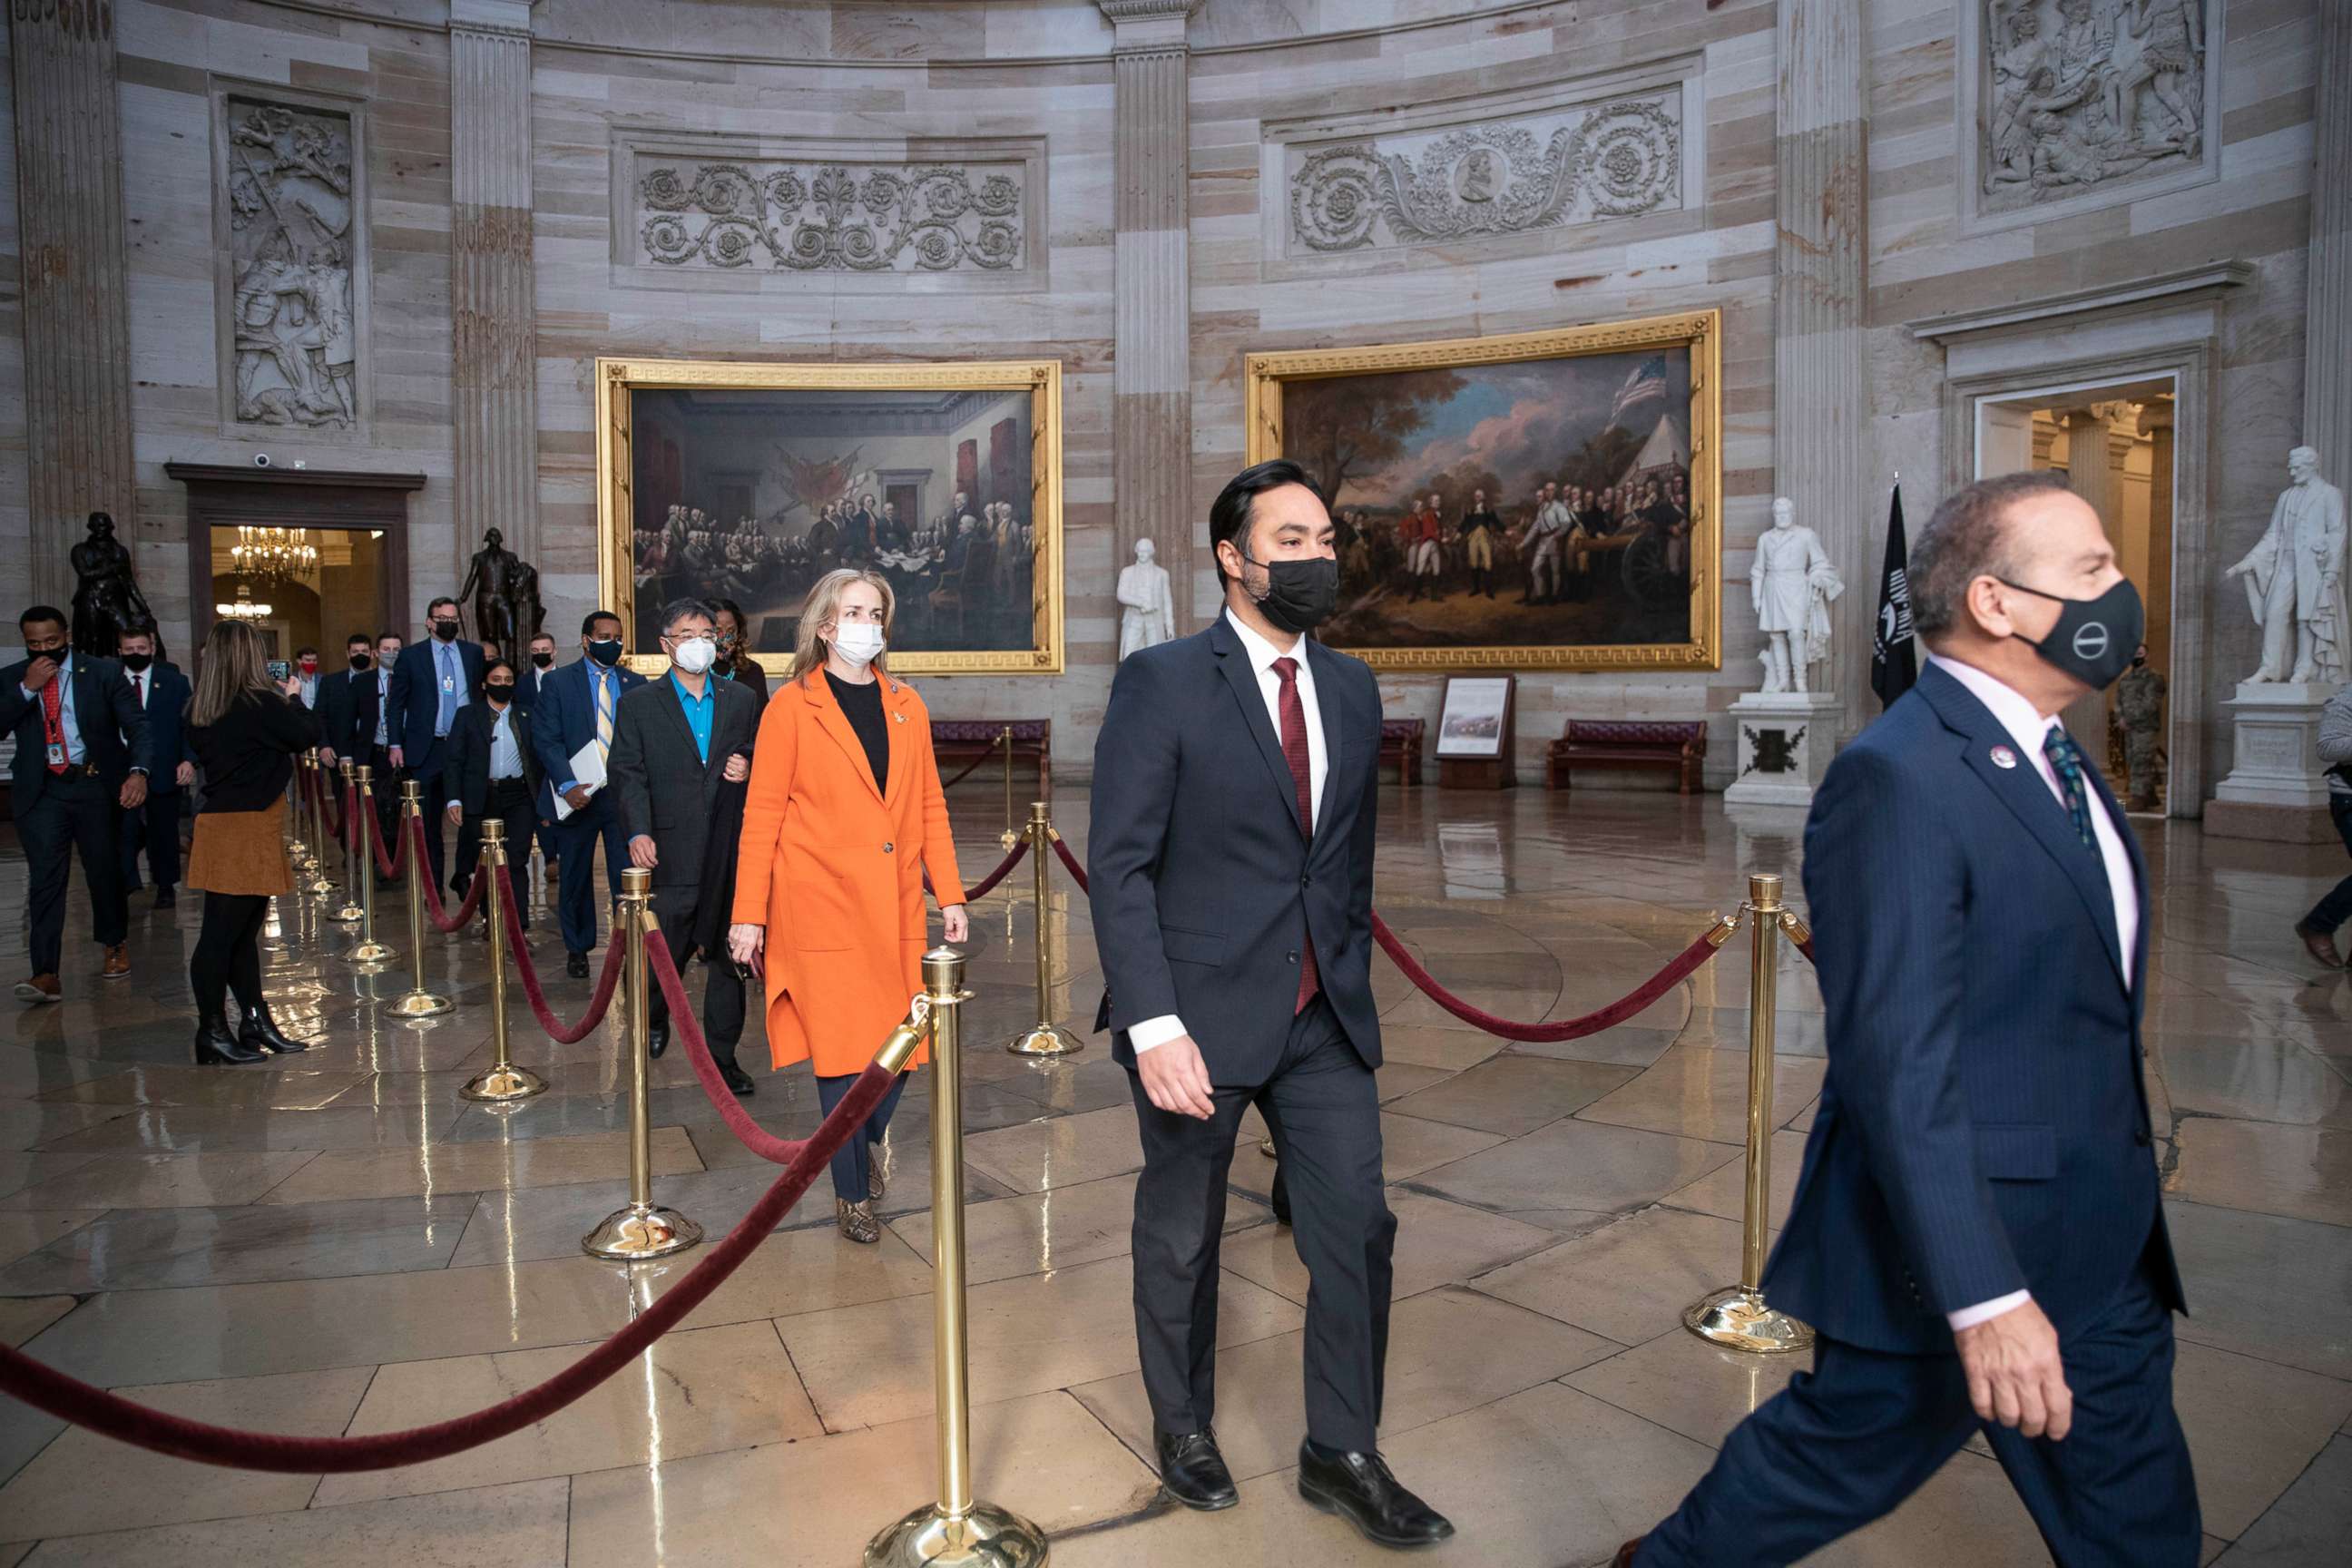 PHOTO: House Impeachment Managers Reps. Ted Lieu, Madeleine Dean, Joaquin Castro, and David Cicilline walk through the U.S. Capitol Rotunda to the Senate chamber on Feb. 8, 2021, in Washington, D.C.